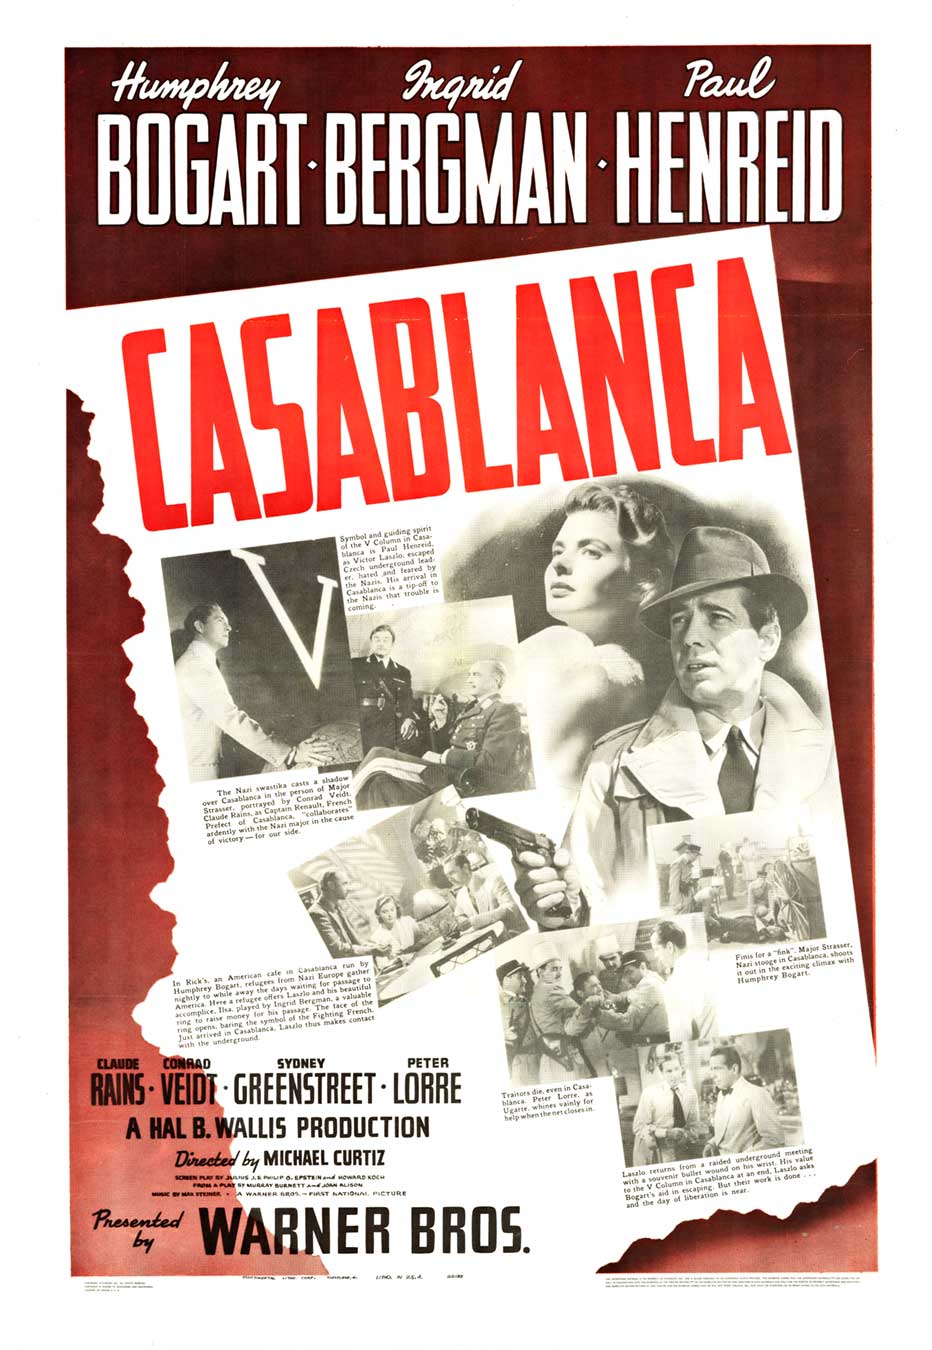 original Cssablanca, 7 vignettes, 1942 movie poster, rare poster, film poster Humphrey Bogart, Ingridd Bergman, Paul Henreid